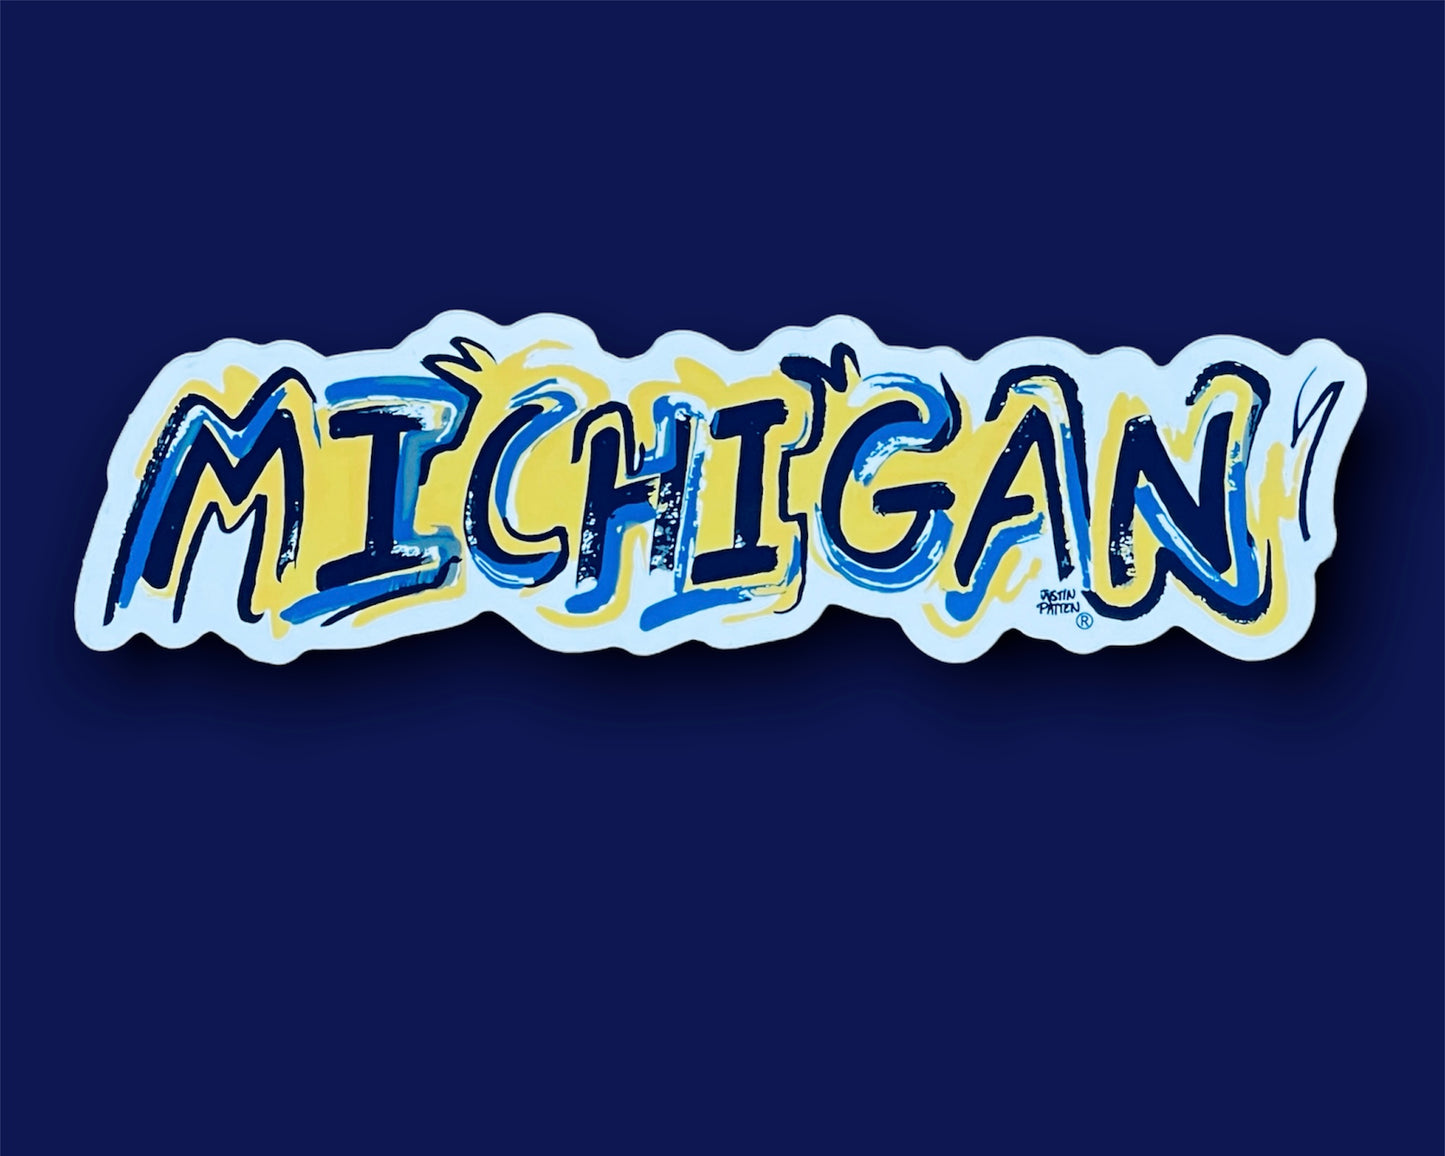 Michigan Sticker by Justin Patten